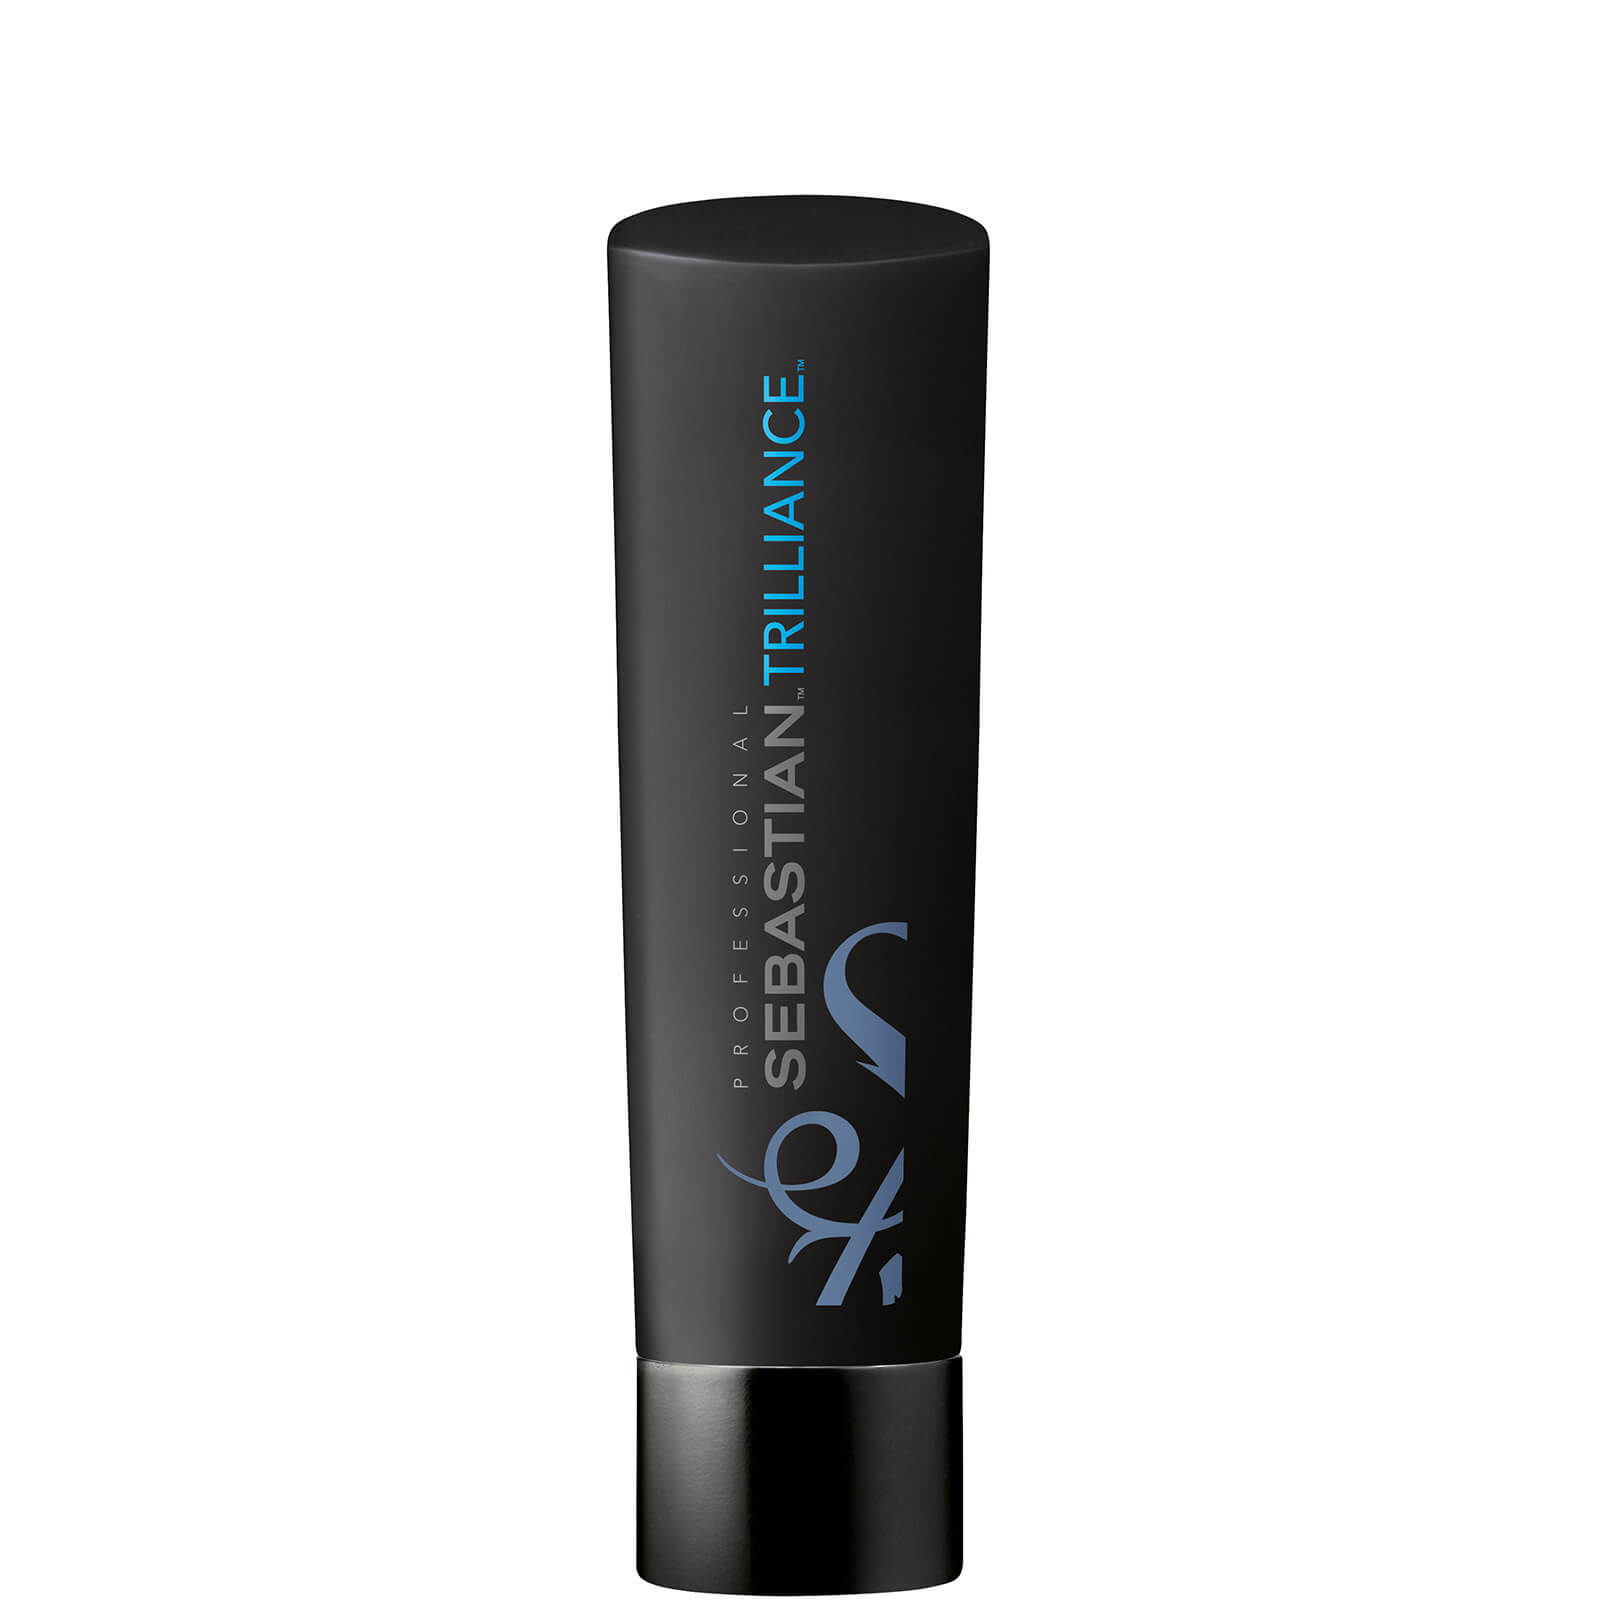 Sebastian Professional Trilliance Shampoo 250ml product